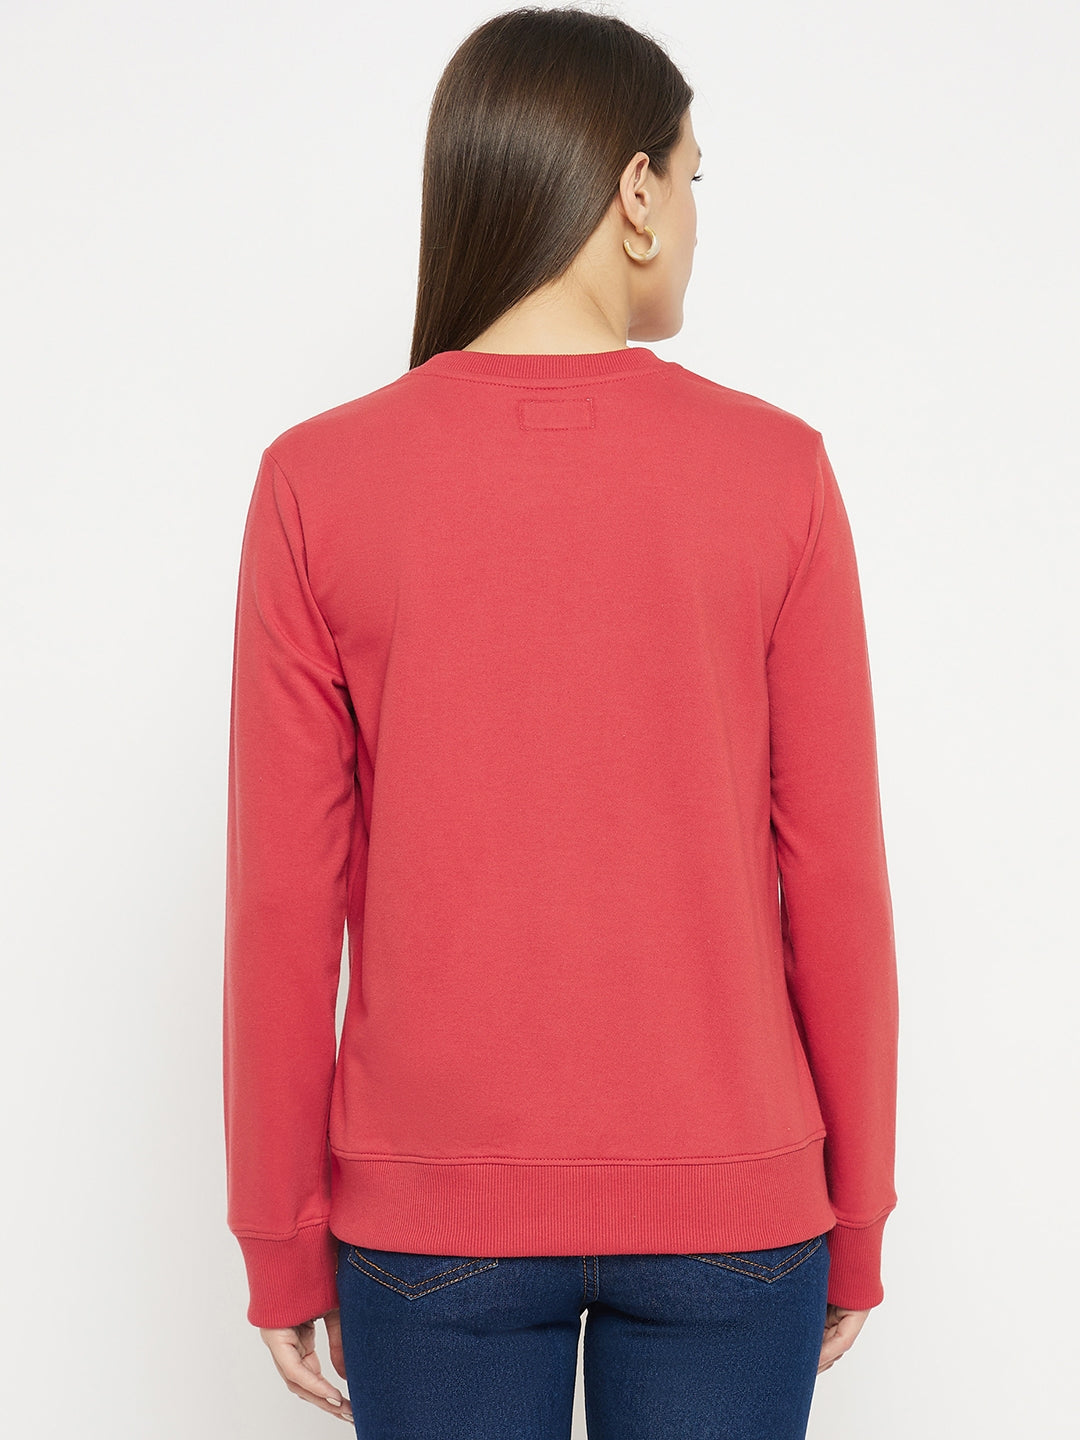 Women's Printed Red Sweatshirt